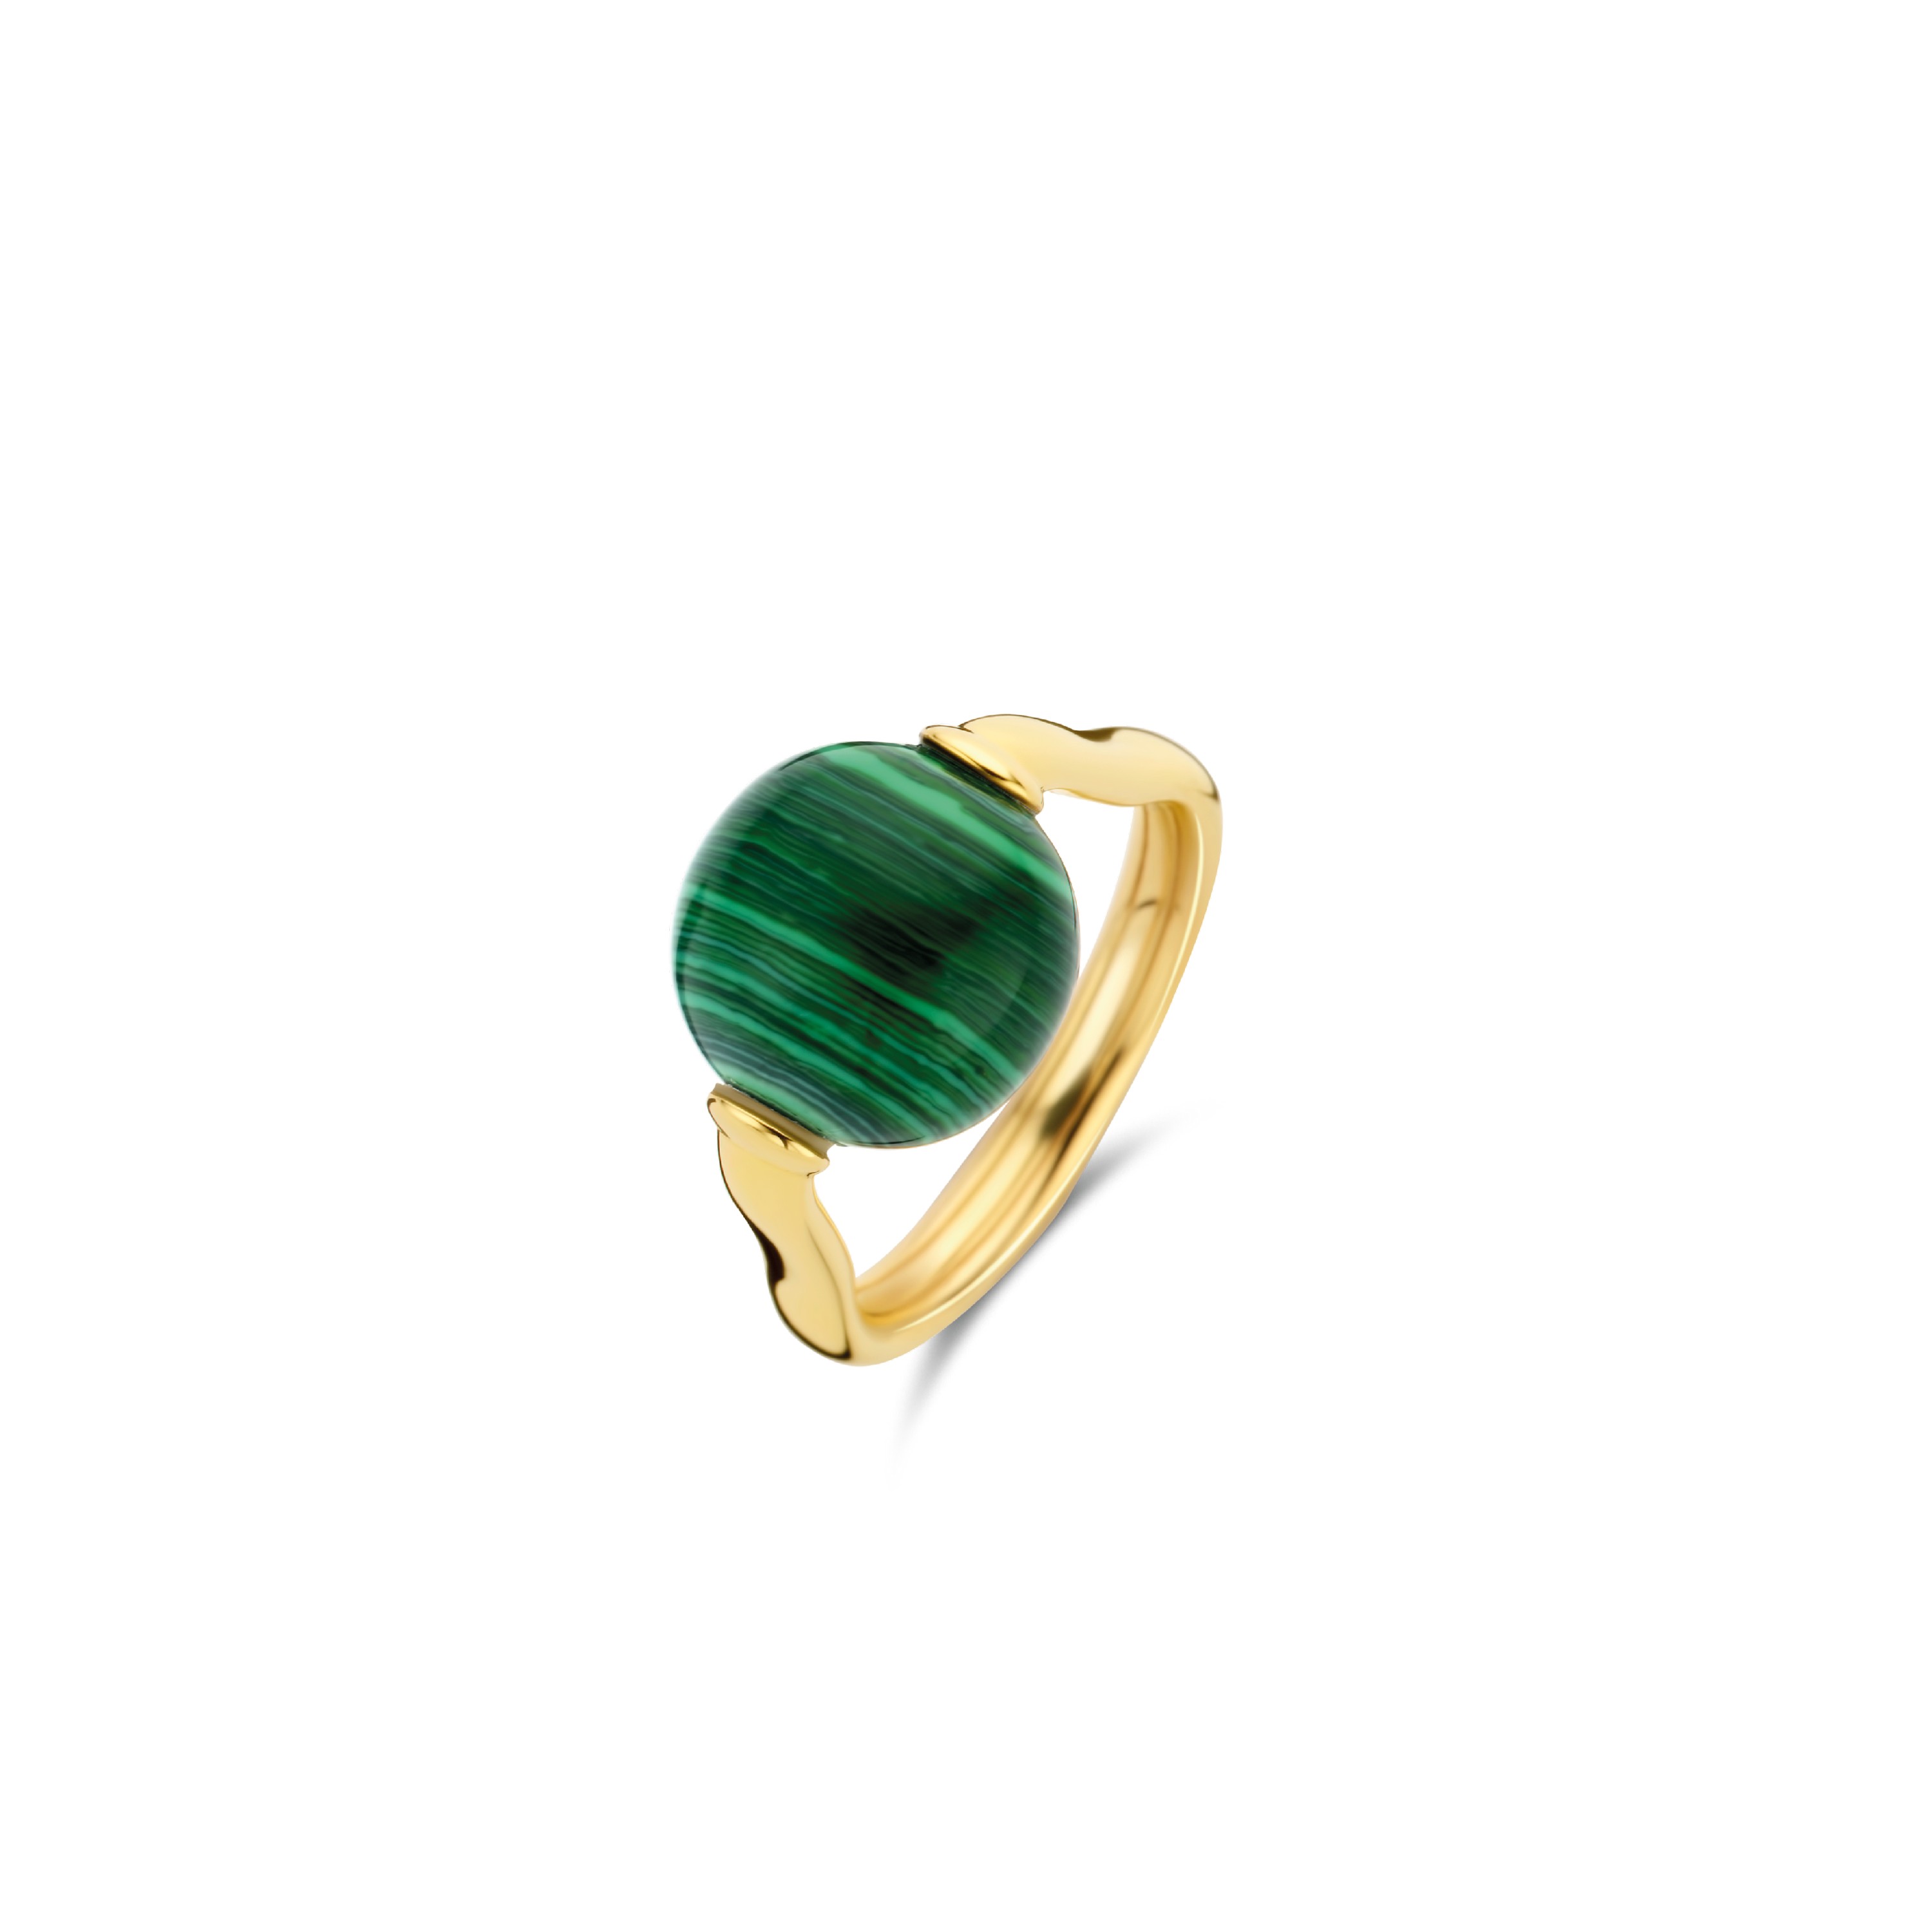 TI SENTO - Milano Ring 12231MA Gala Jewelers Inc. White Oak, PA